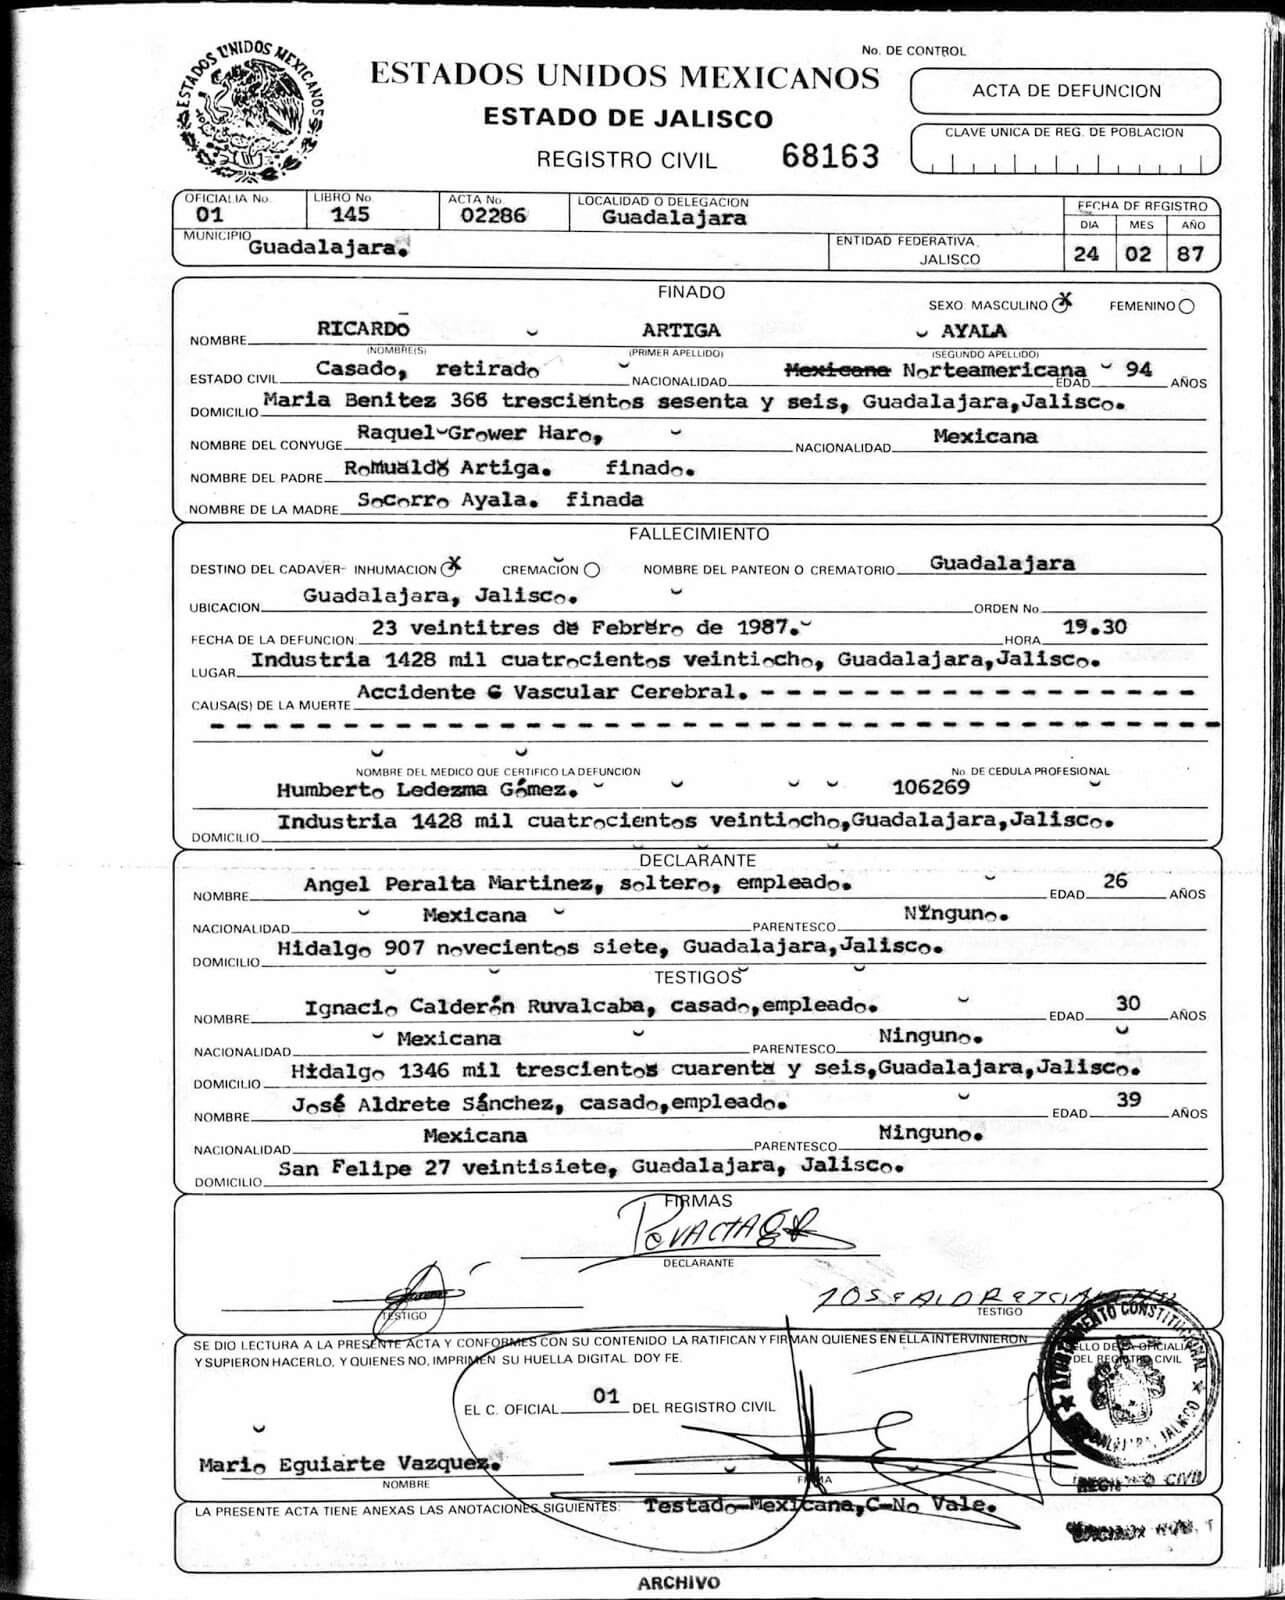 Marriage Certificate Translation Template Invitation Pertaining To Death Certificate Translation Template